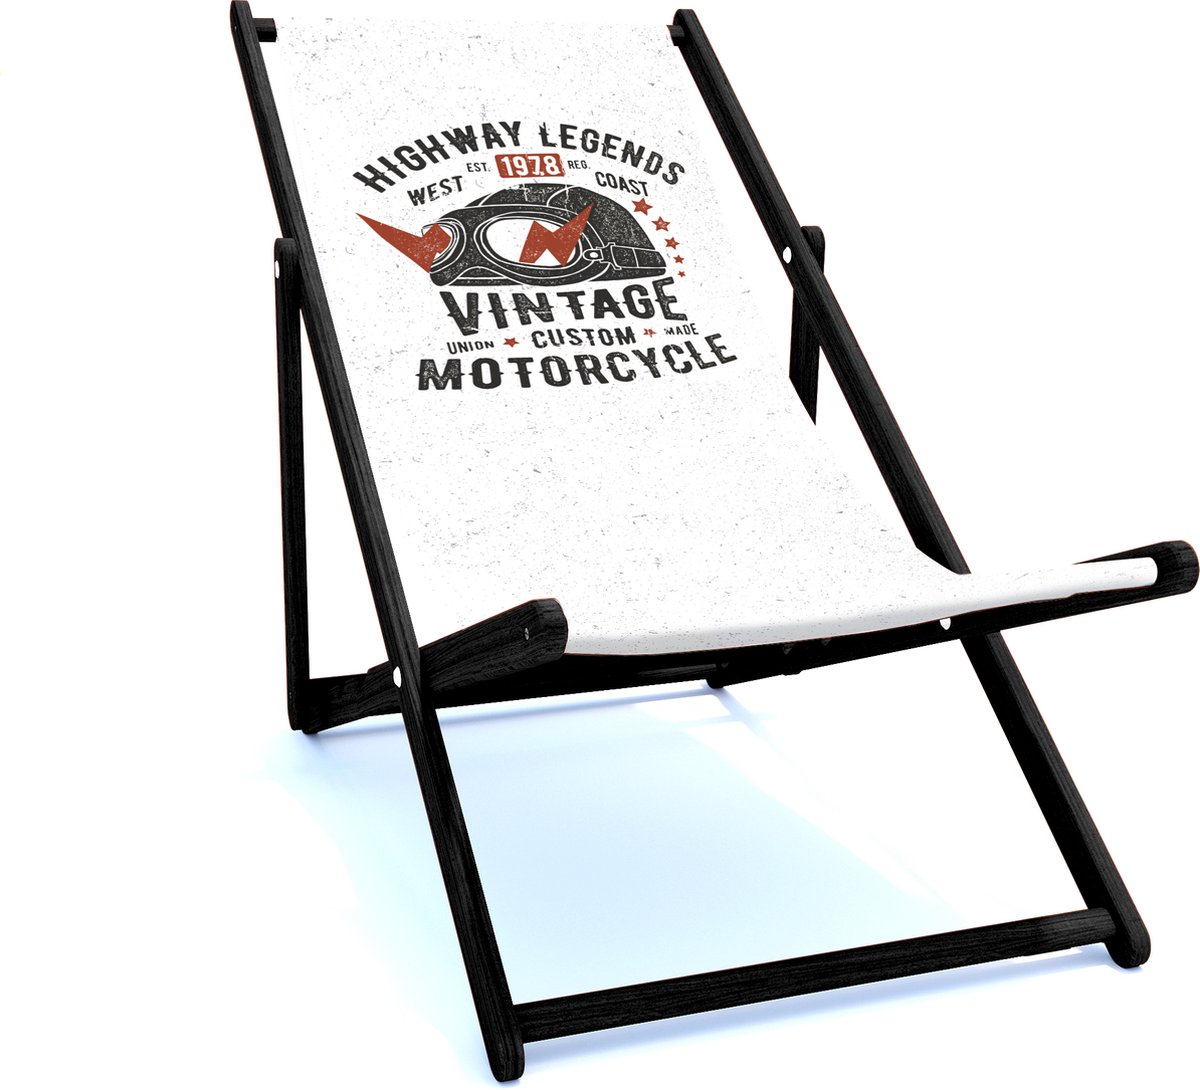 Holtaz Strandstoel Hout Inklapbaar Comfortabele Zonnebed Ligbed met verstelbare Lighoogte met stoffen Motors zwart houten frame